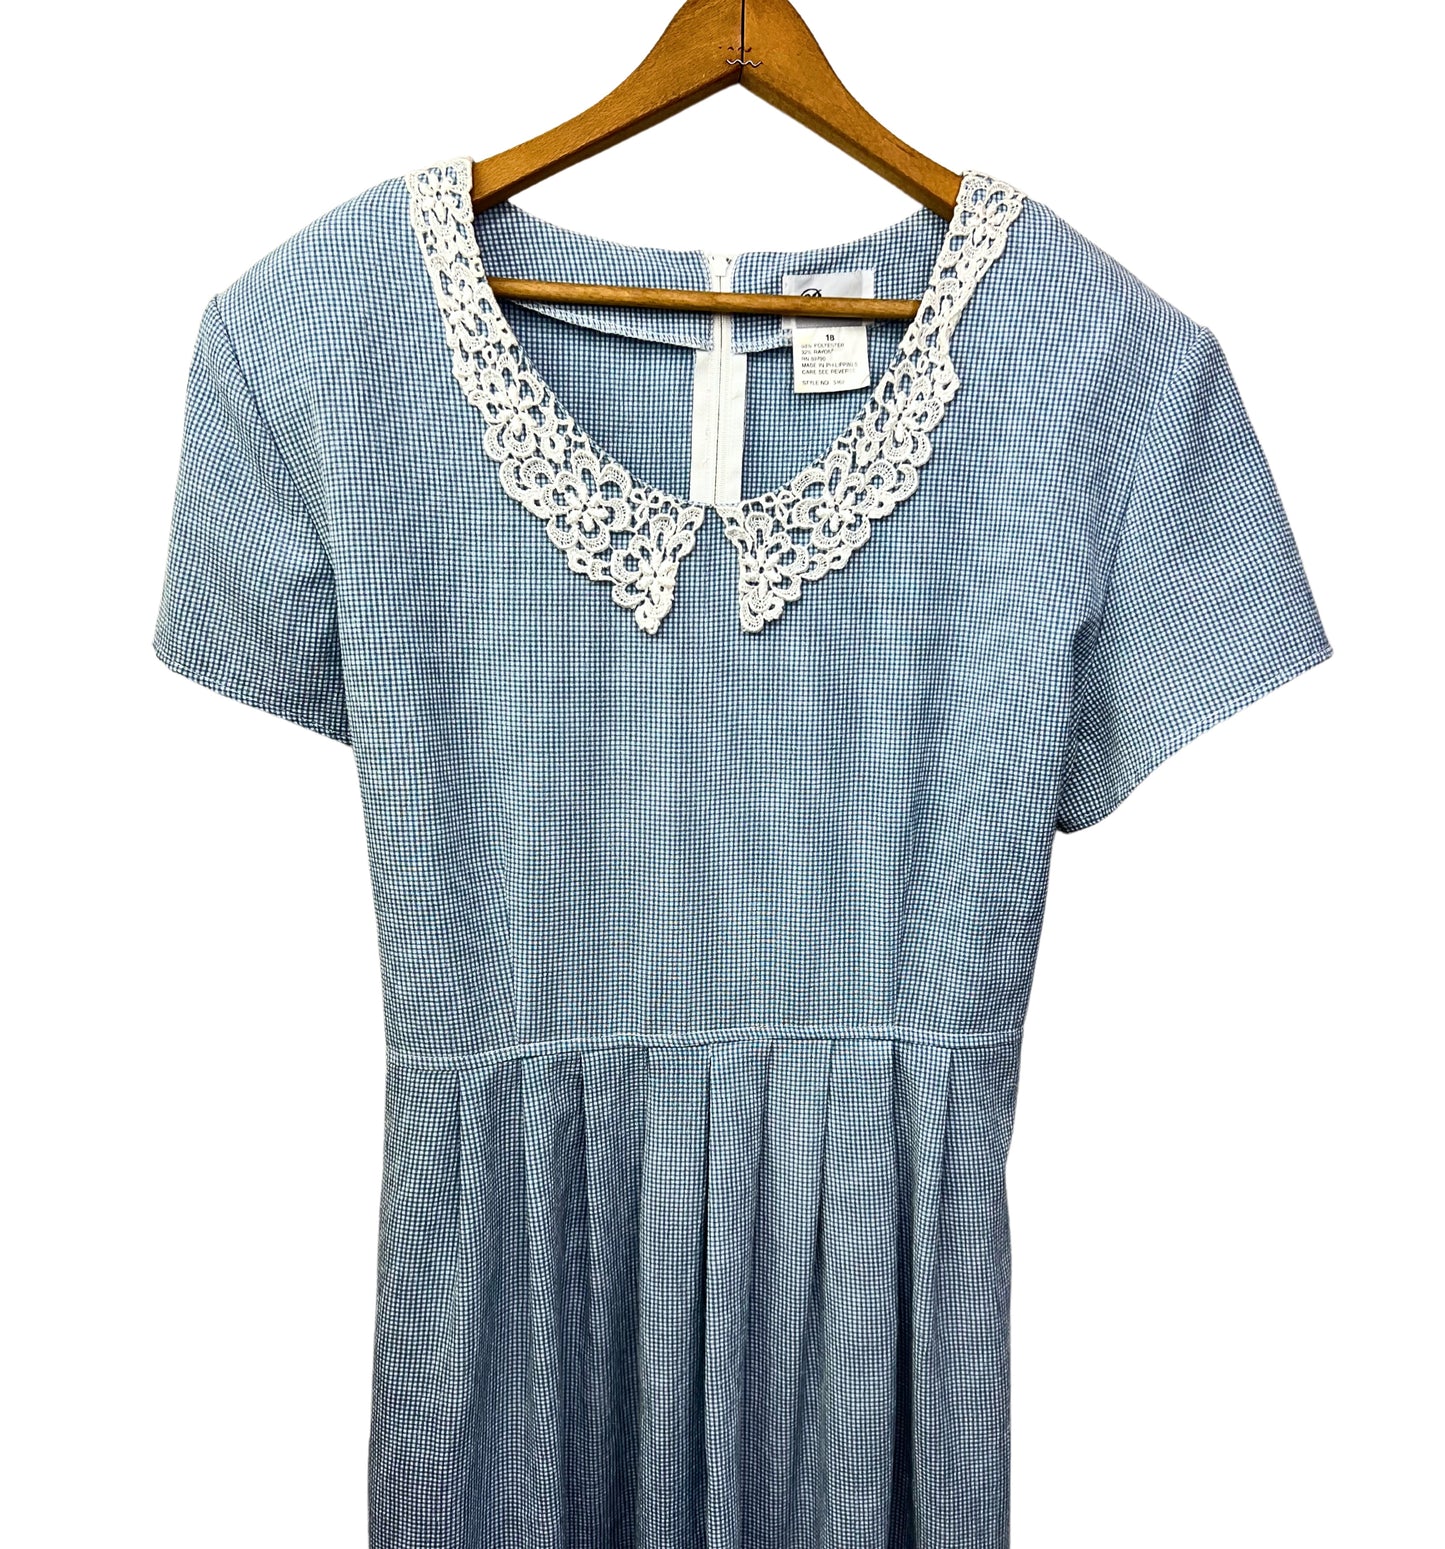 90’s Blue Gingham Plaid Lace Collar Dress Size 18